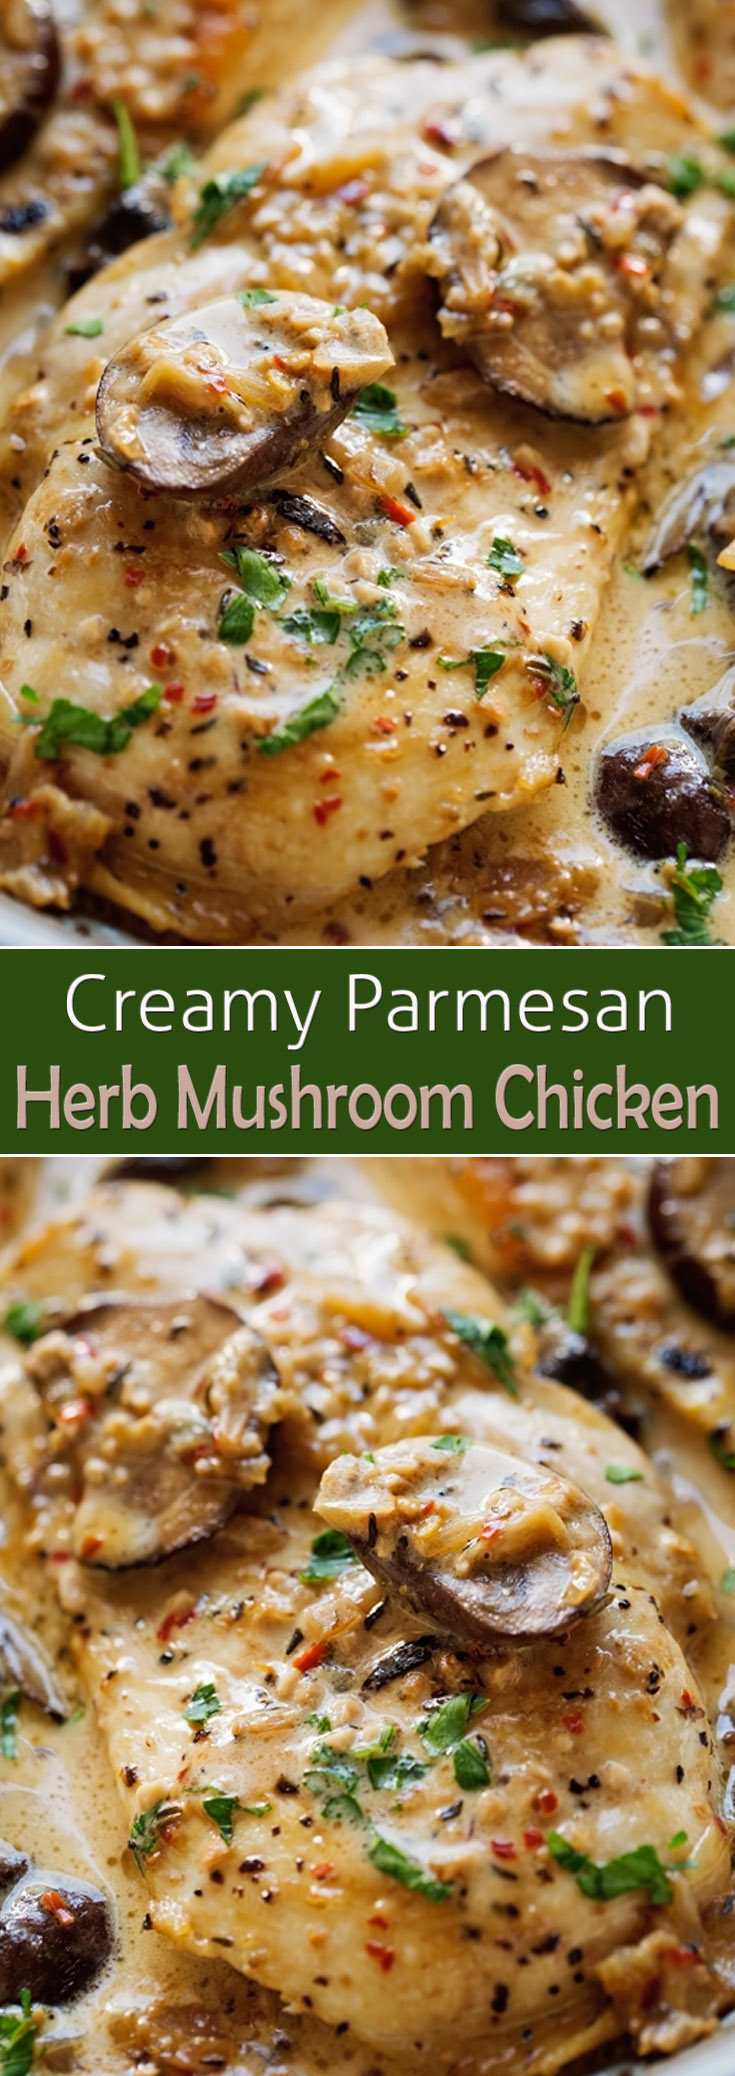 Creamy Parmesan Herb Mushroom Chicken